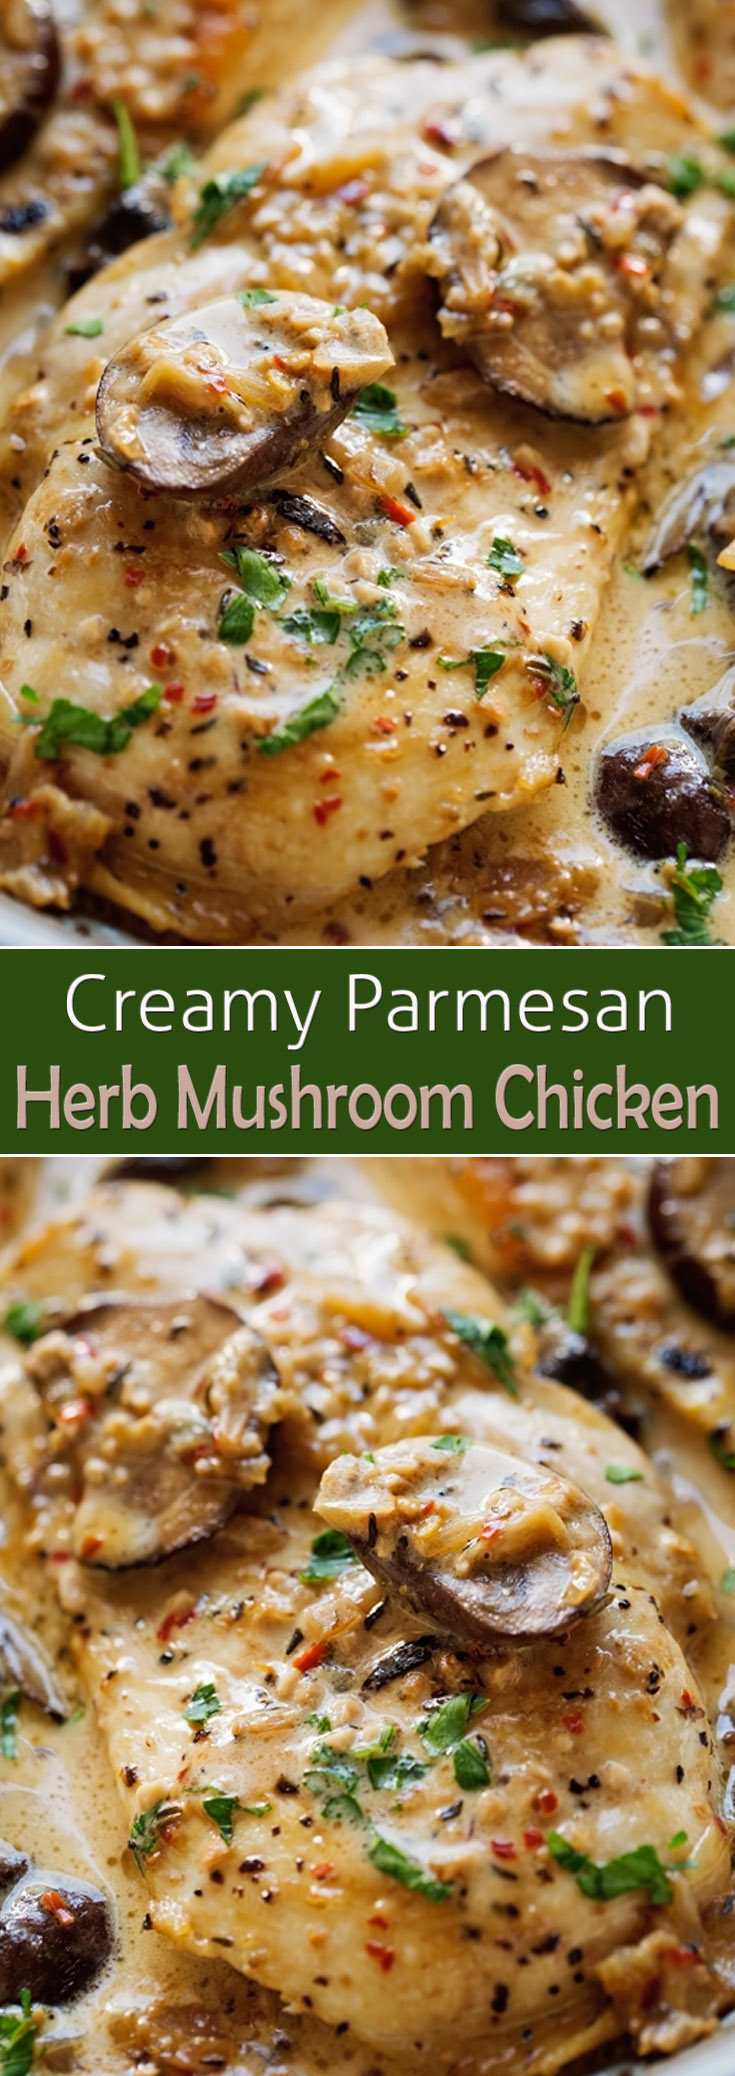 Creamy Parmesan Herb Mushroom Chicken